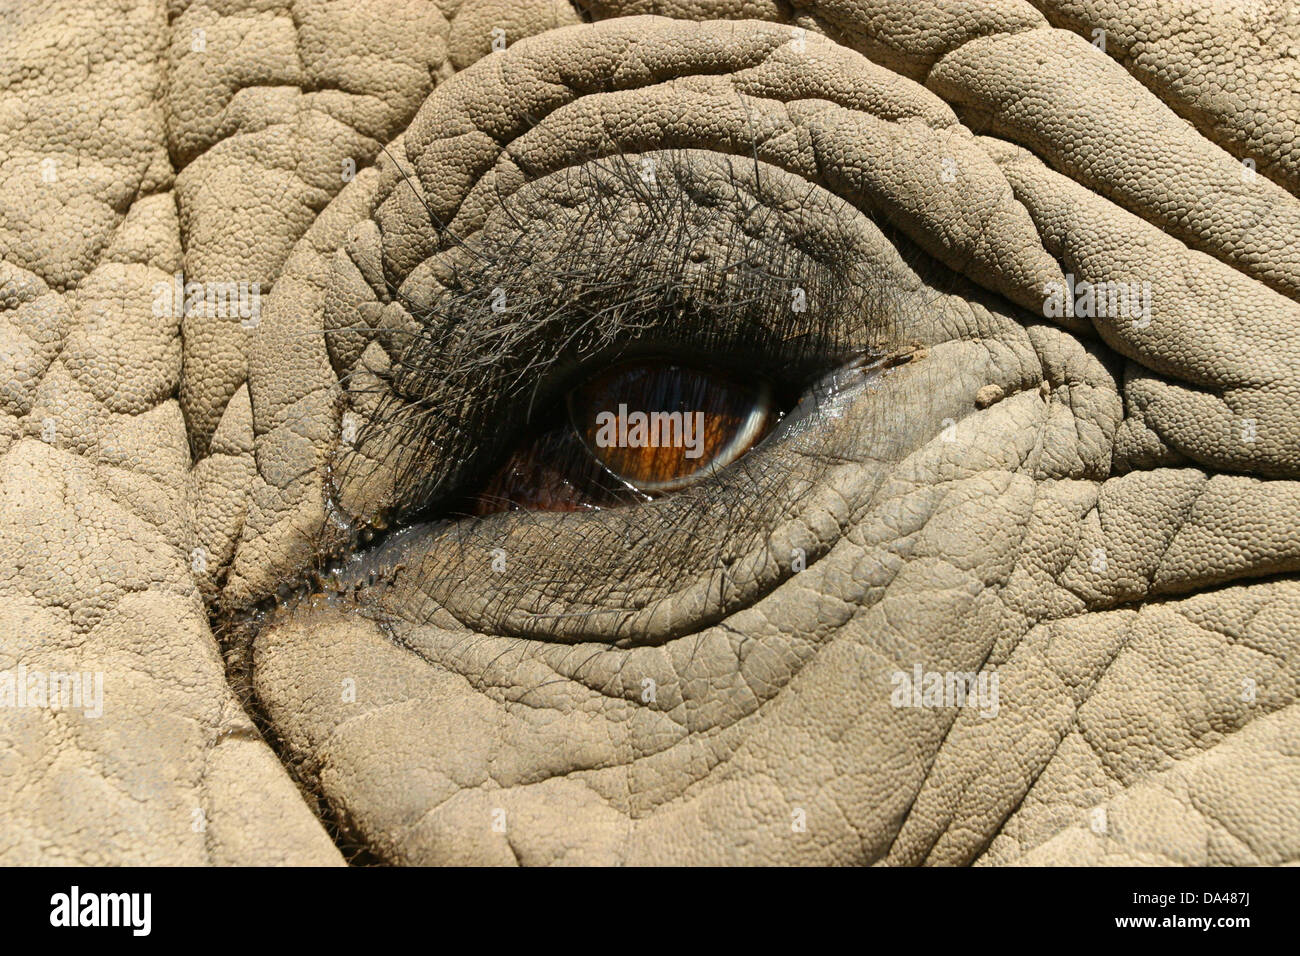 Nahaufnahme eines Elefanten Auge Stockfoto